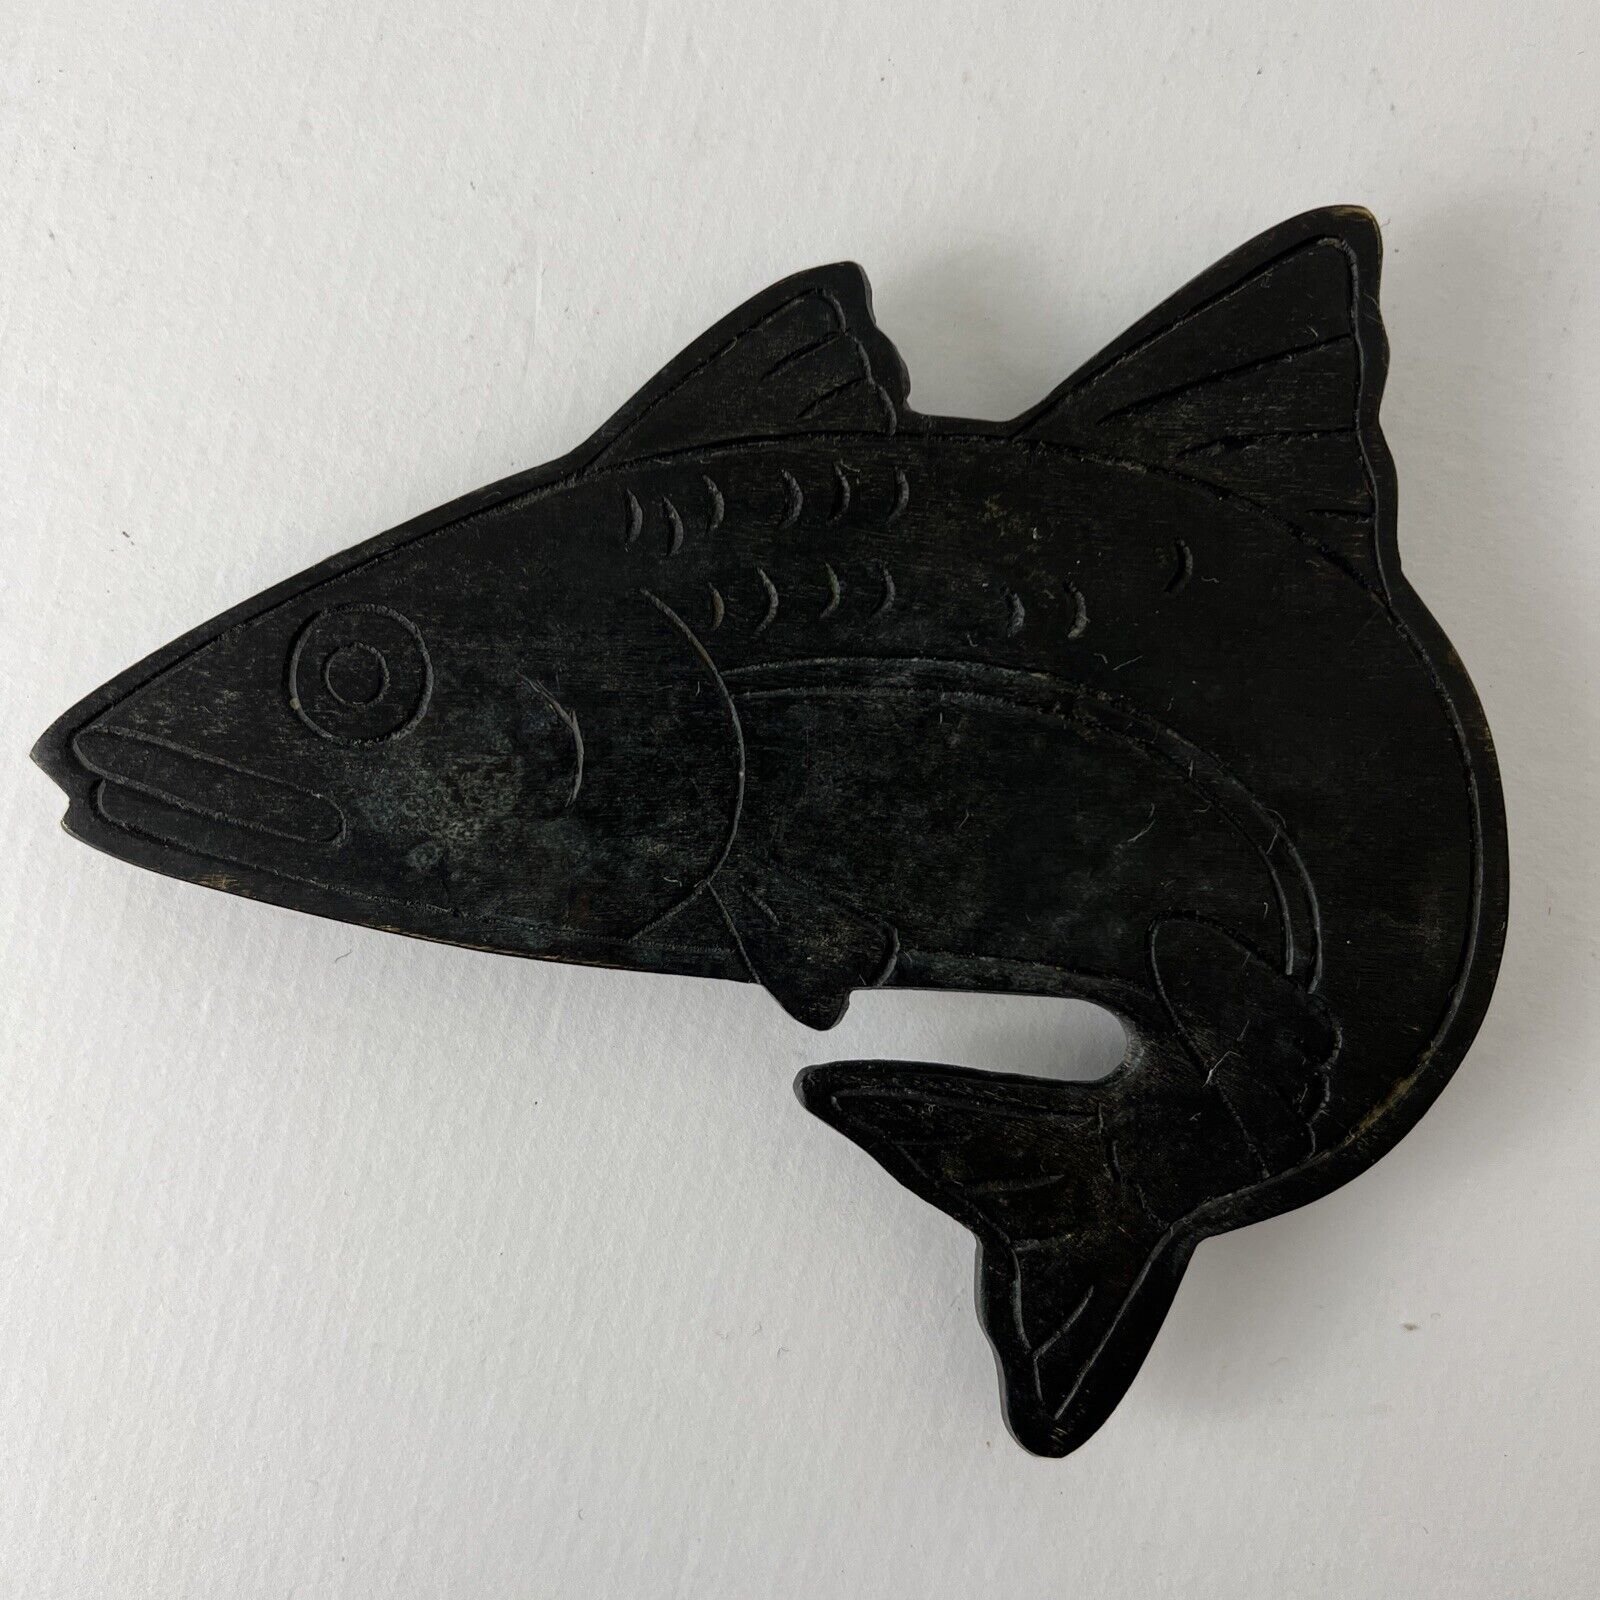 Native Tribal Fish Trivet Heavy Metal Black 7”x6” Inuit?